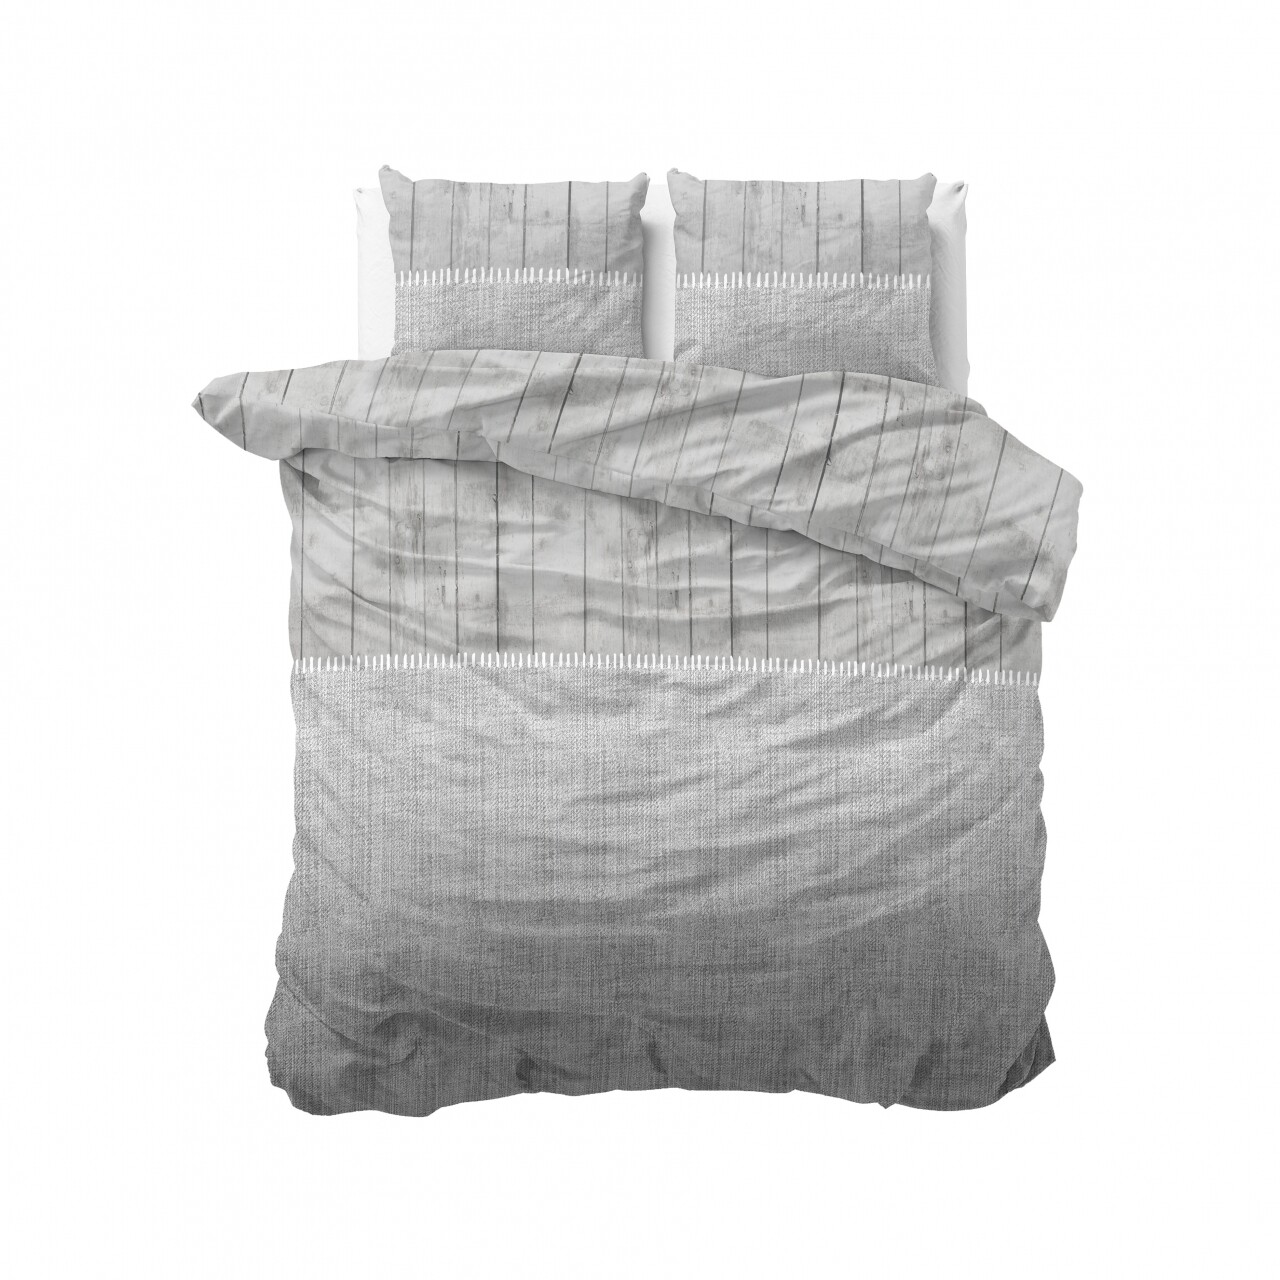 Lenjerie De Pat Dubla Wood Fabric Grey, Royal Textile, 3 Piese, 200 X 220 Cm, 100% Bumbac, Gri